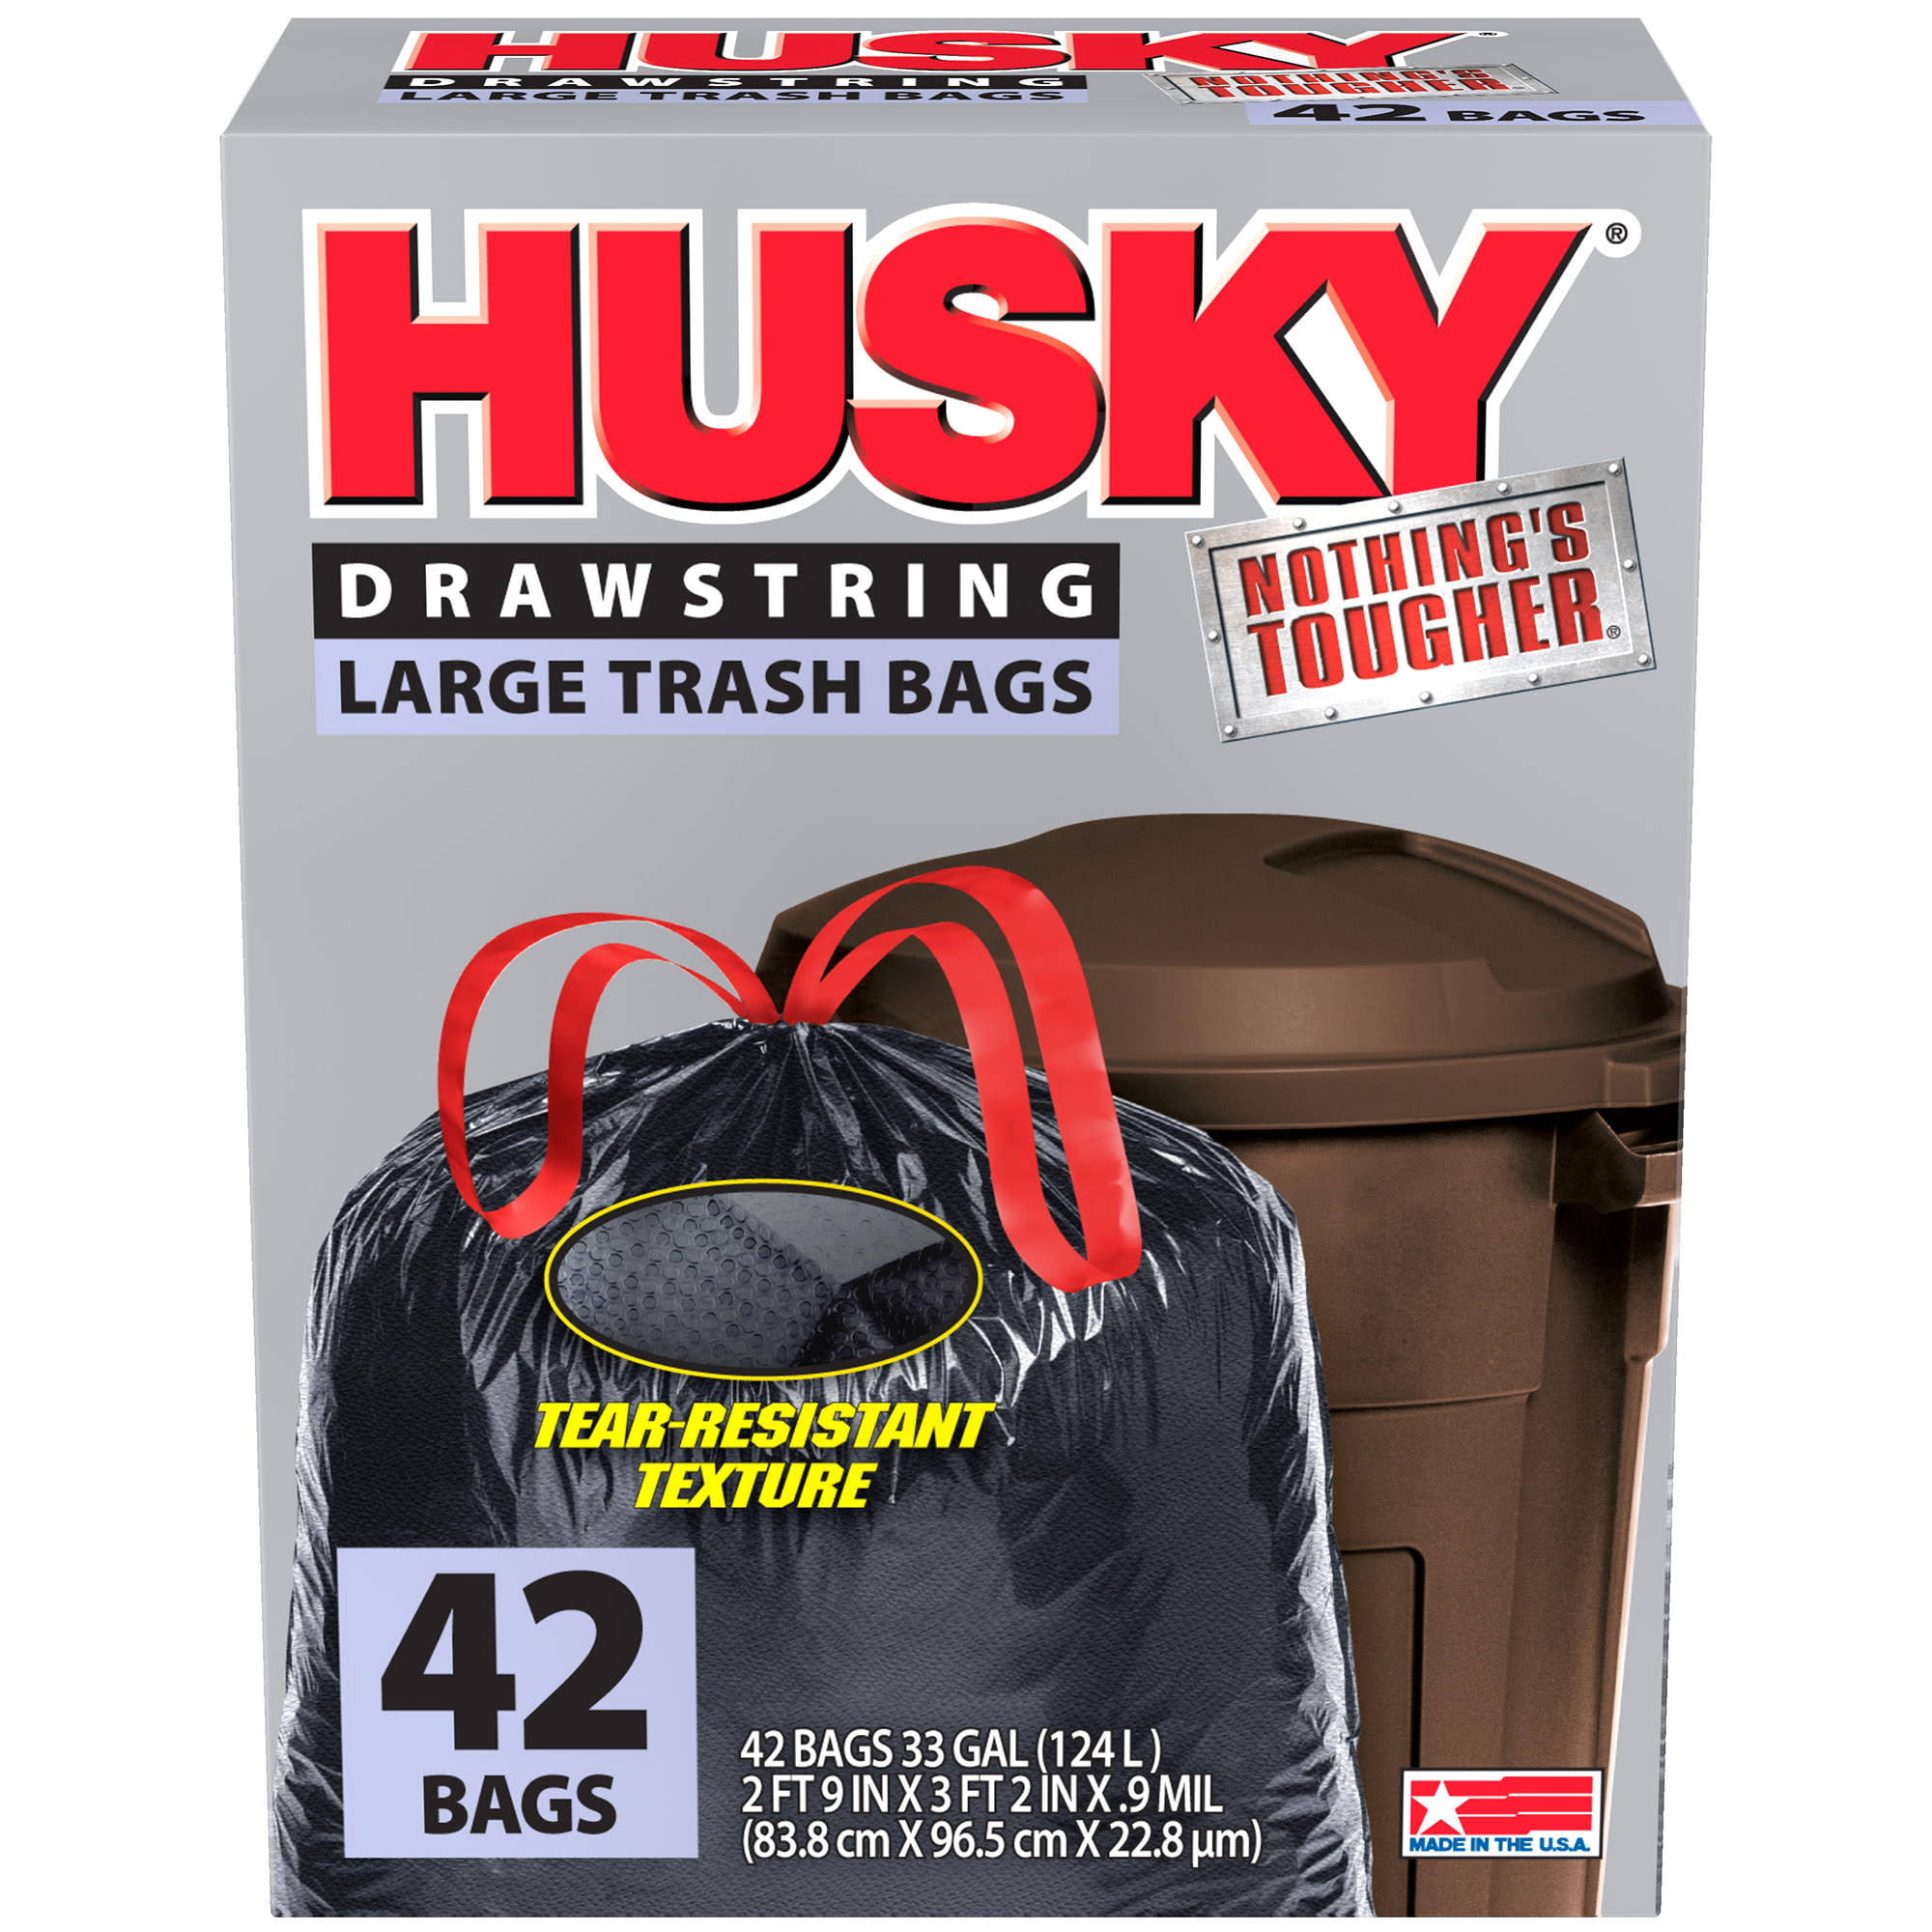 Poly-America Husky Drawstring Trash Bags - Large, x42